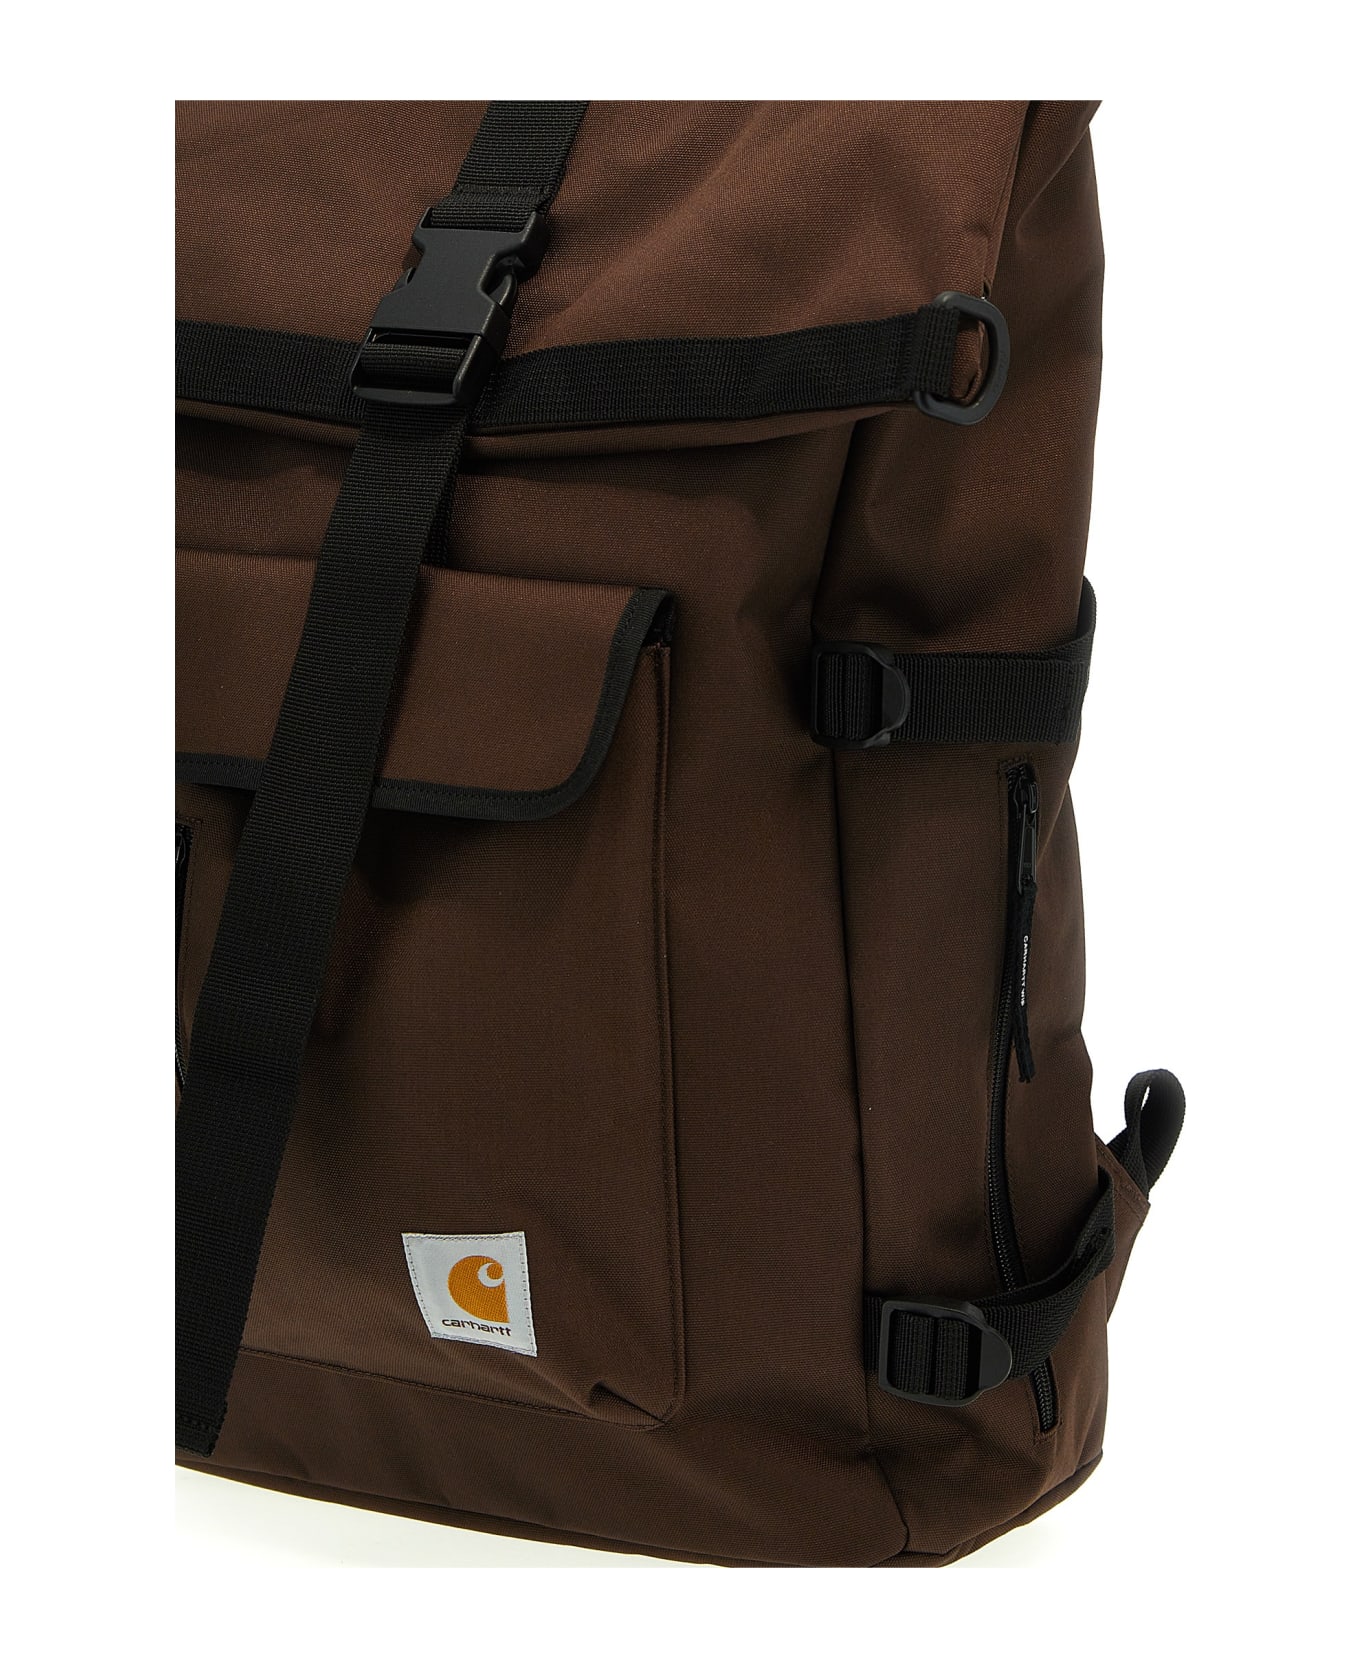 Carhartt 'philis' Backpack - Brown